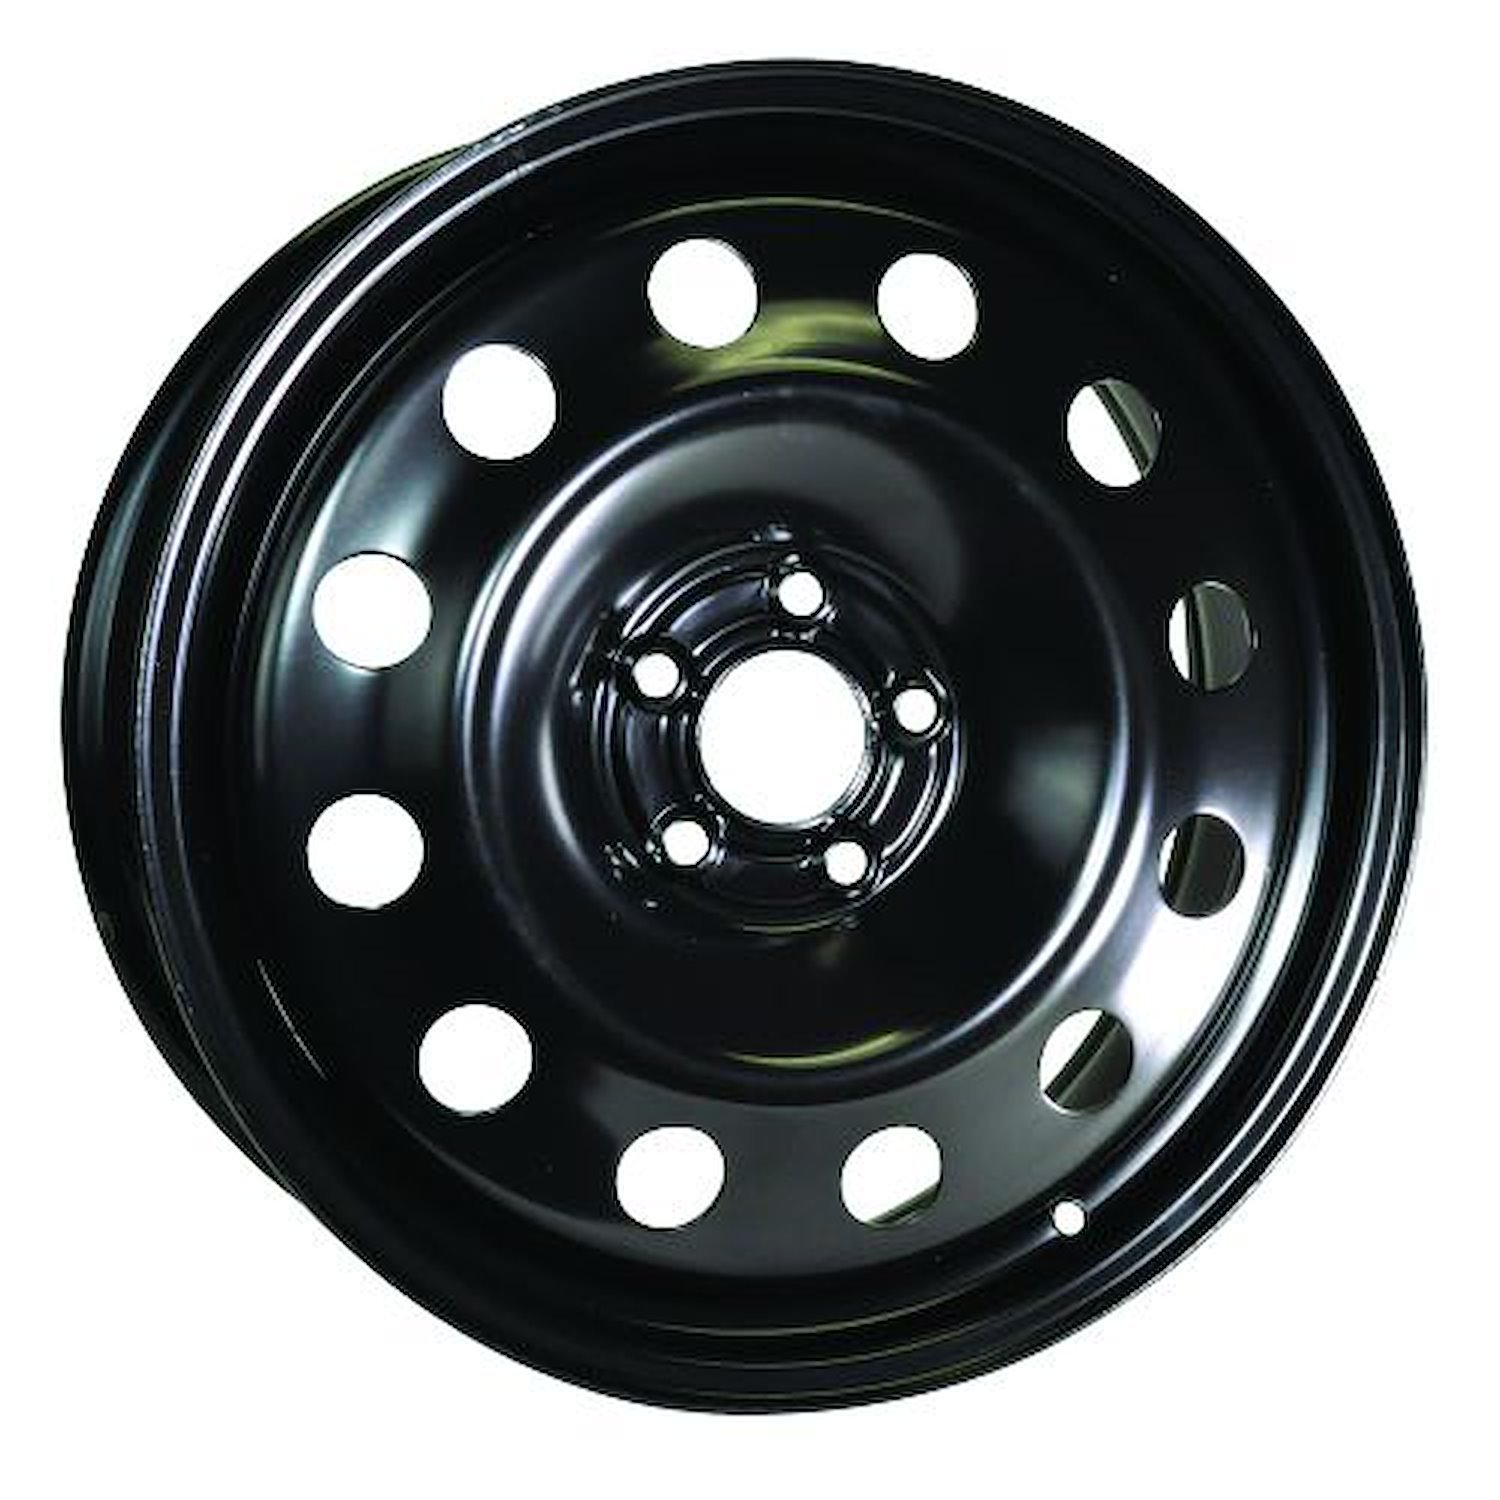 X48518 Steel Wheel [Size: 18" x 7.50"] Black Finish